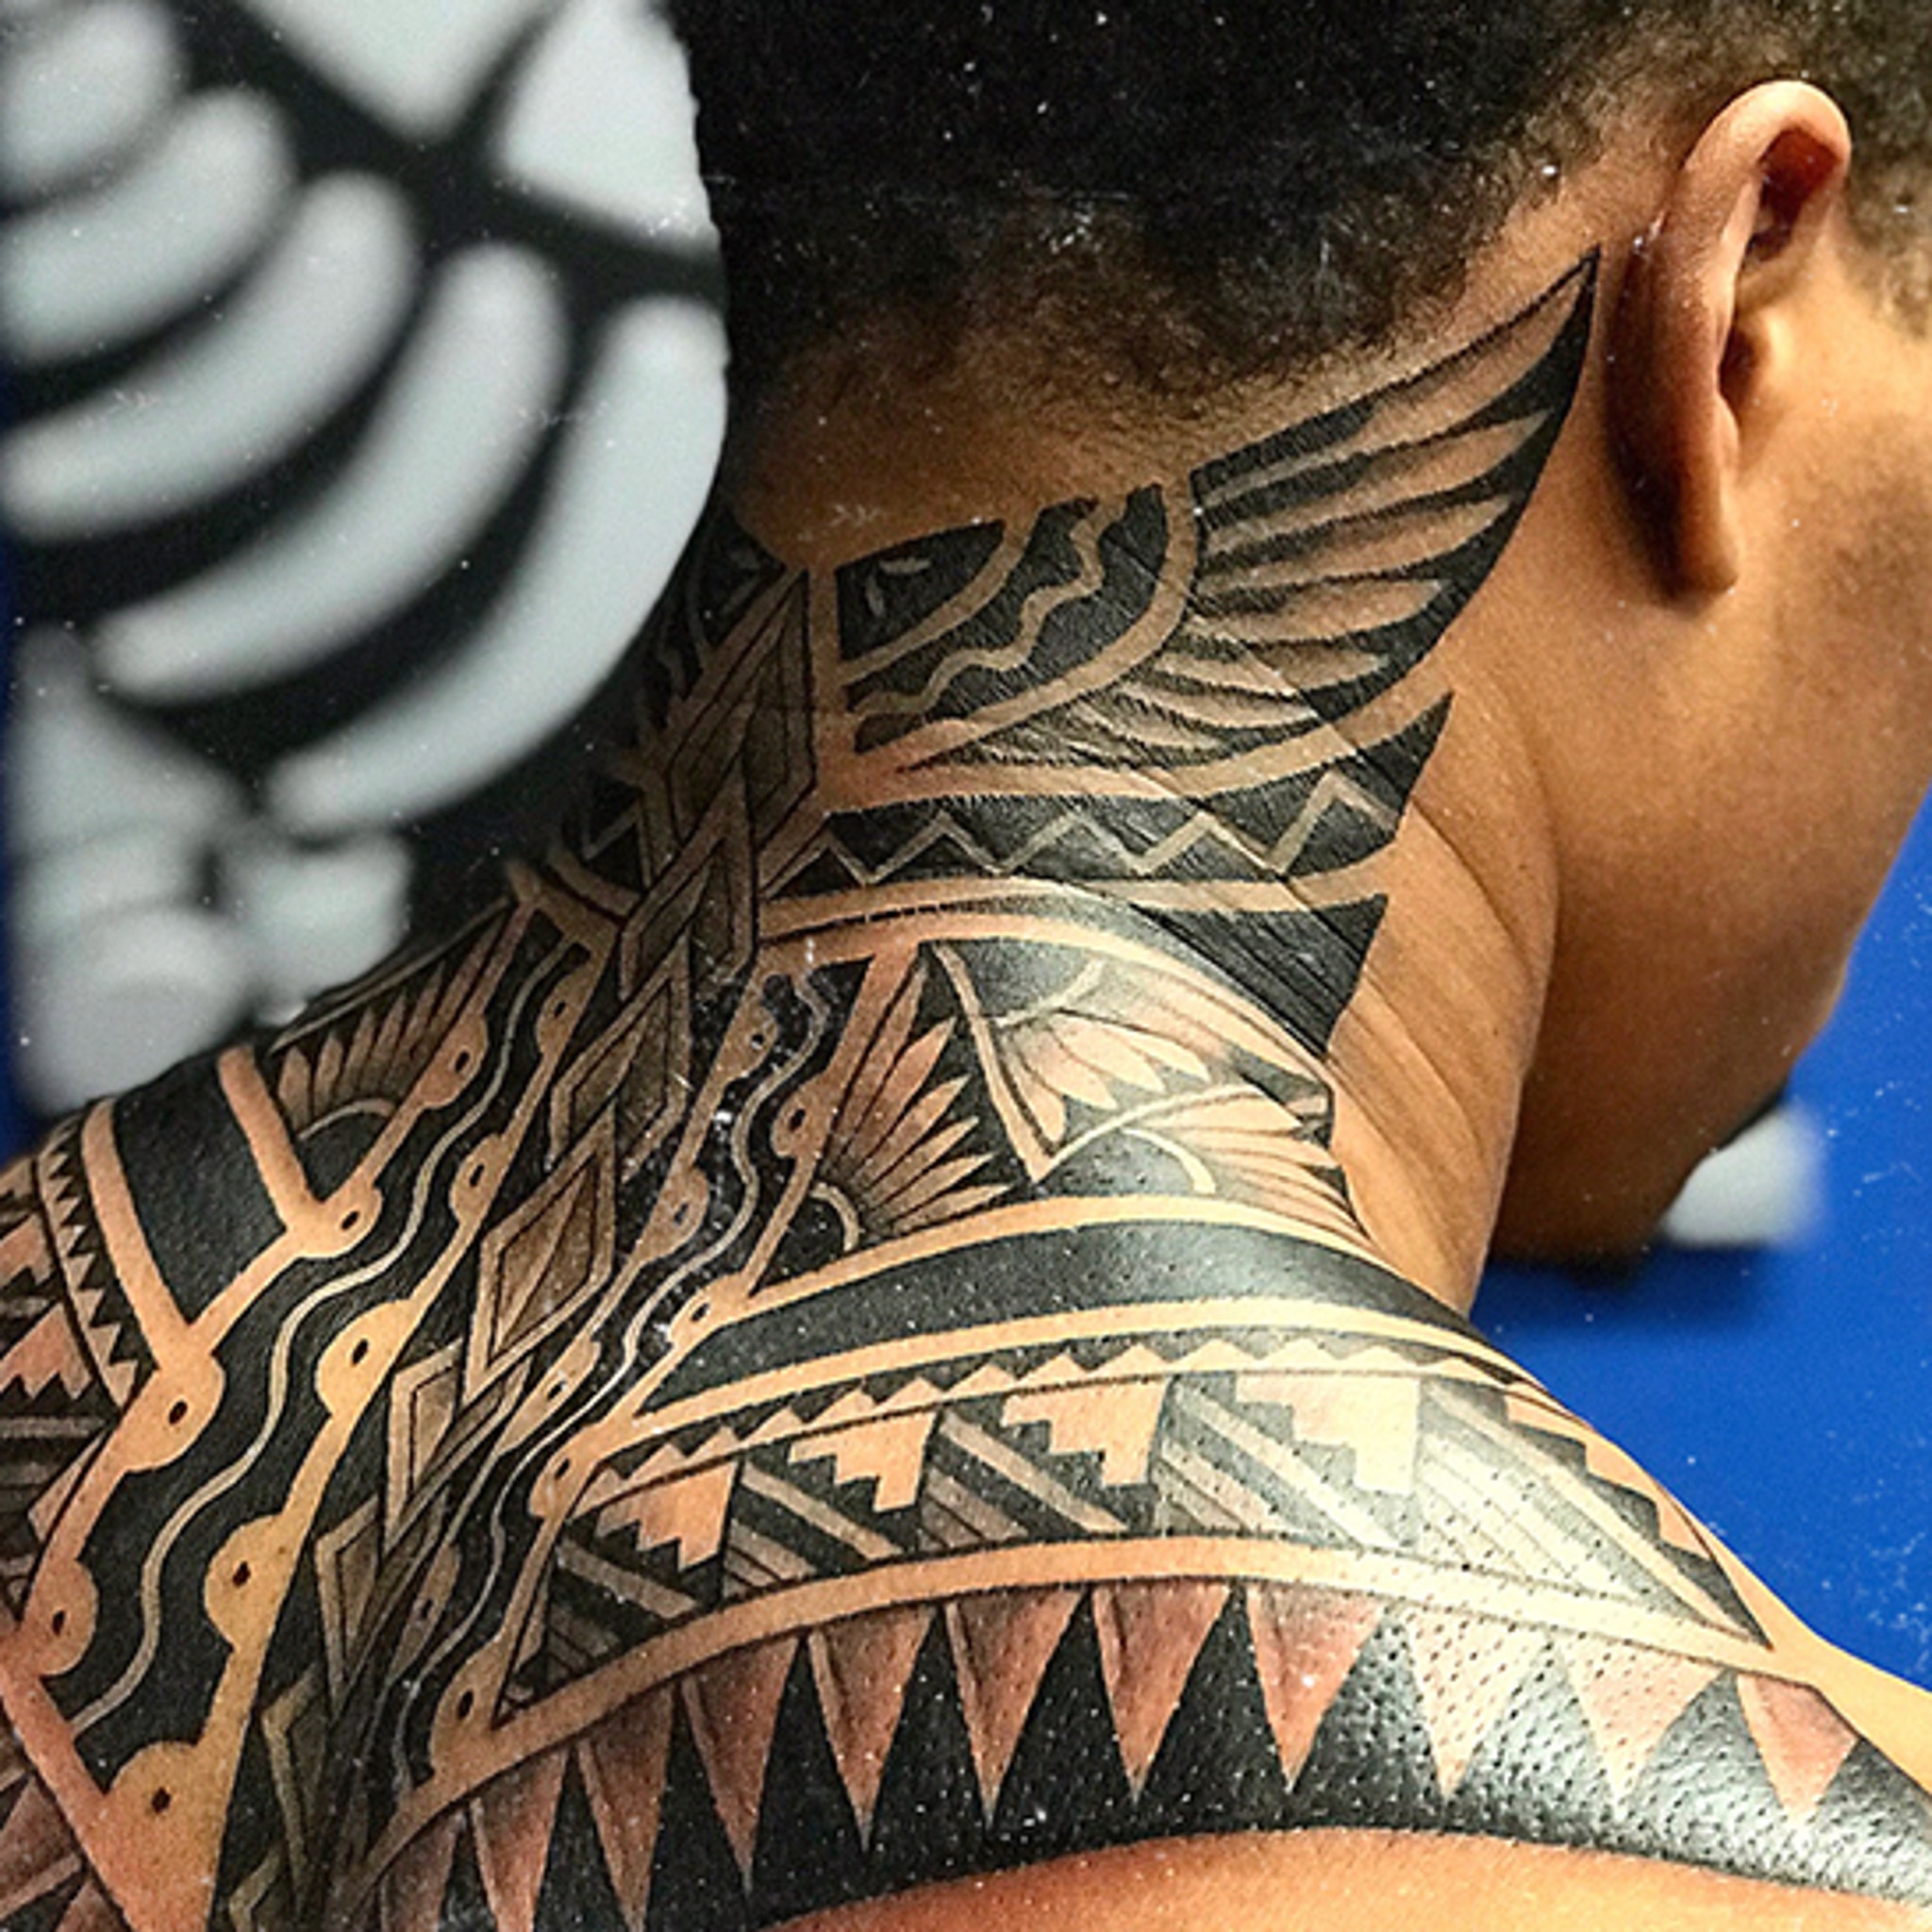 125 Top Neck Tattoo Designs This Year - Wild Tattoo Art